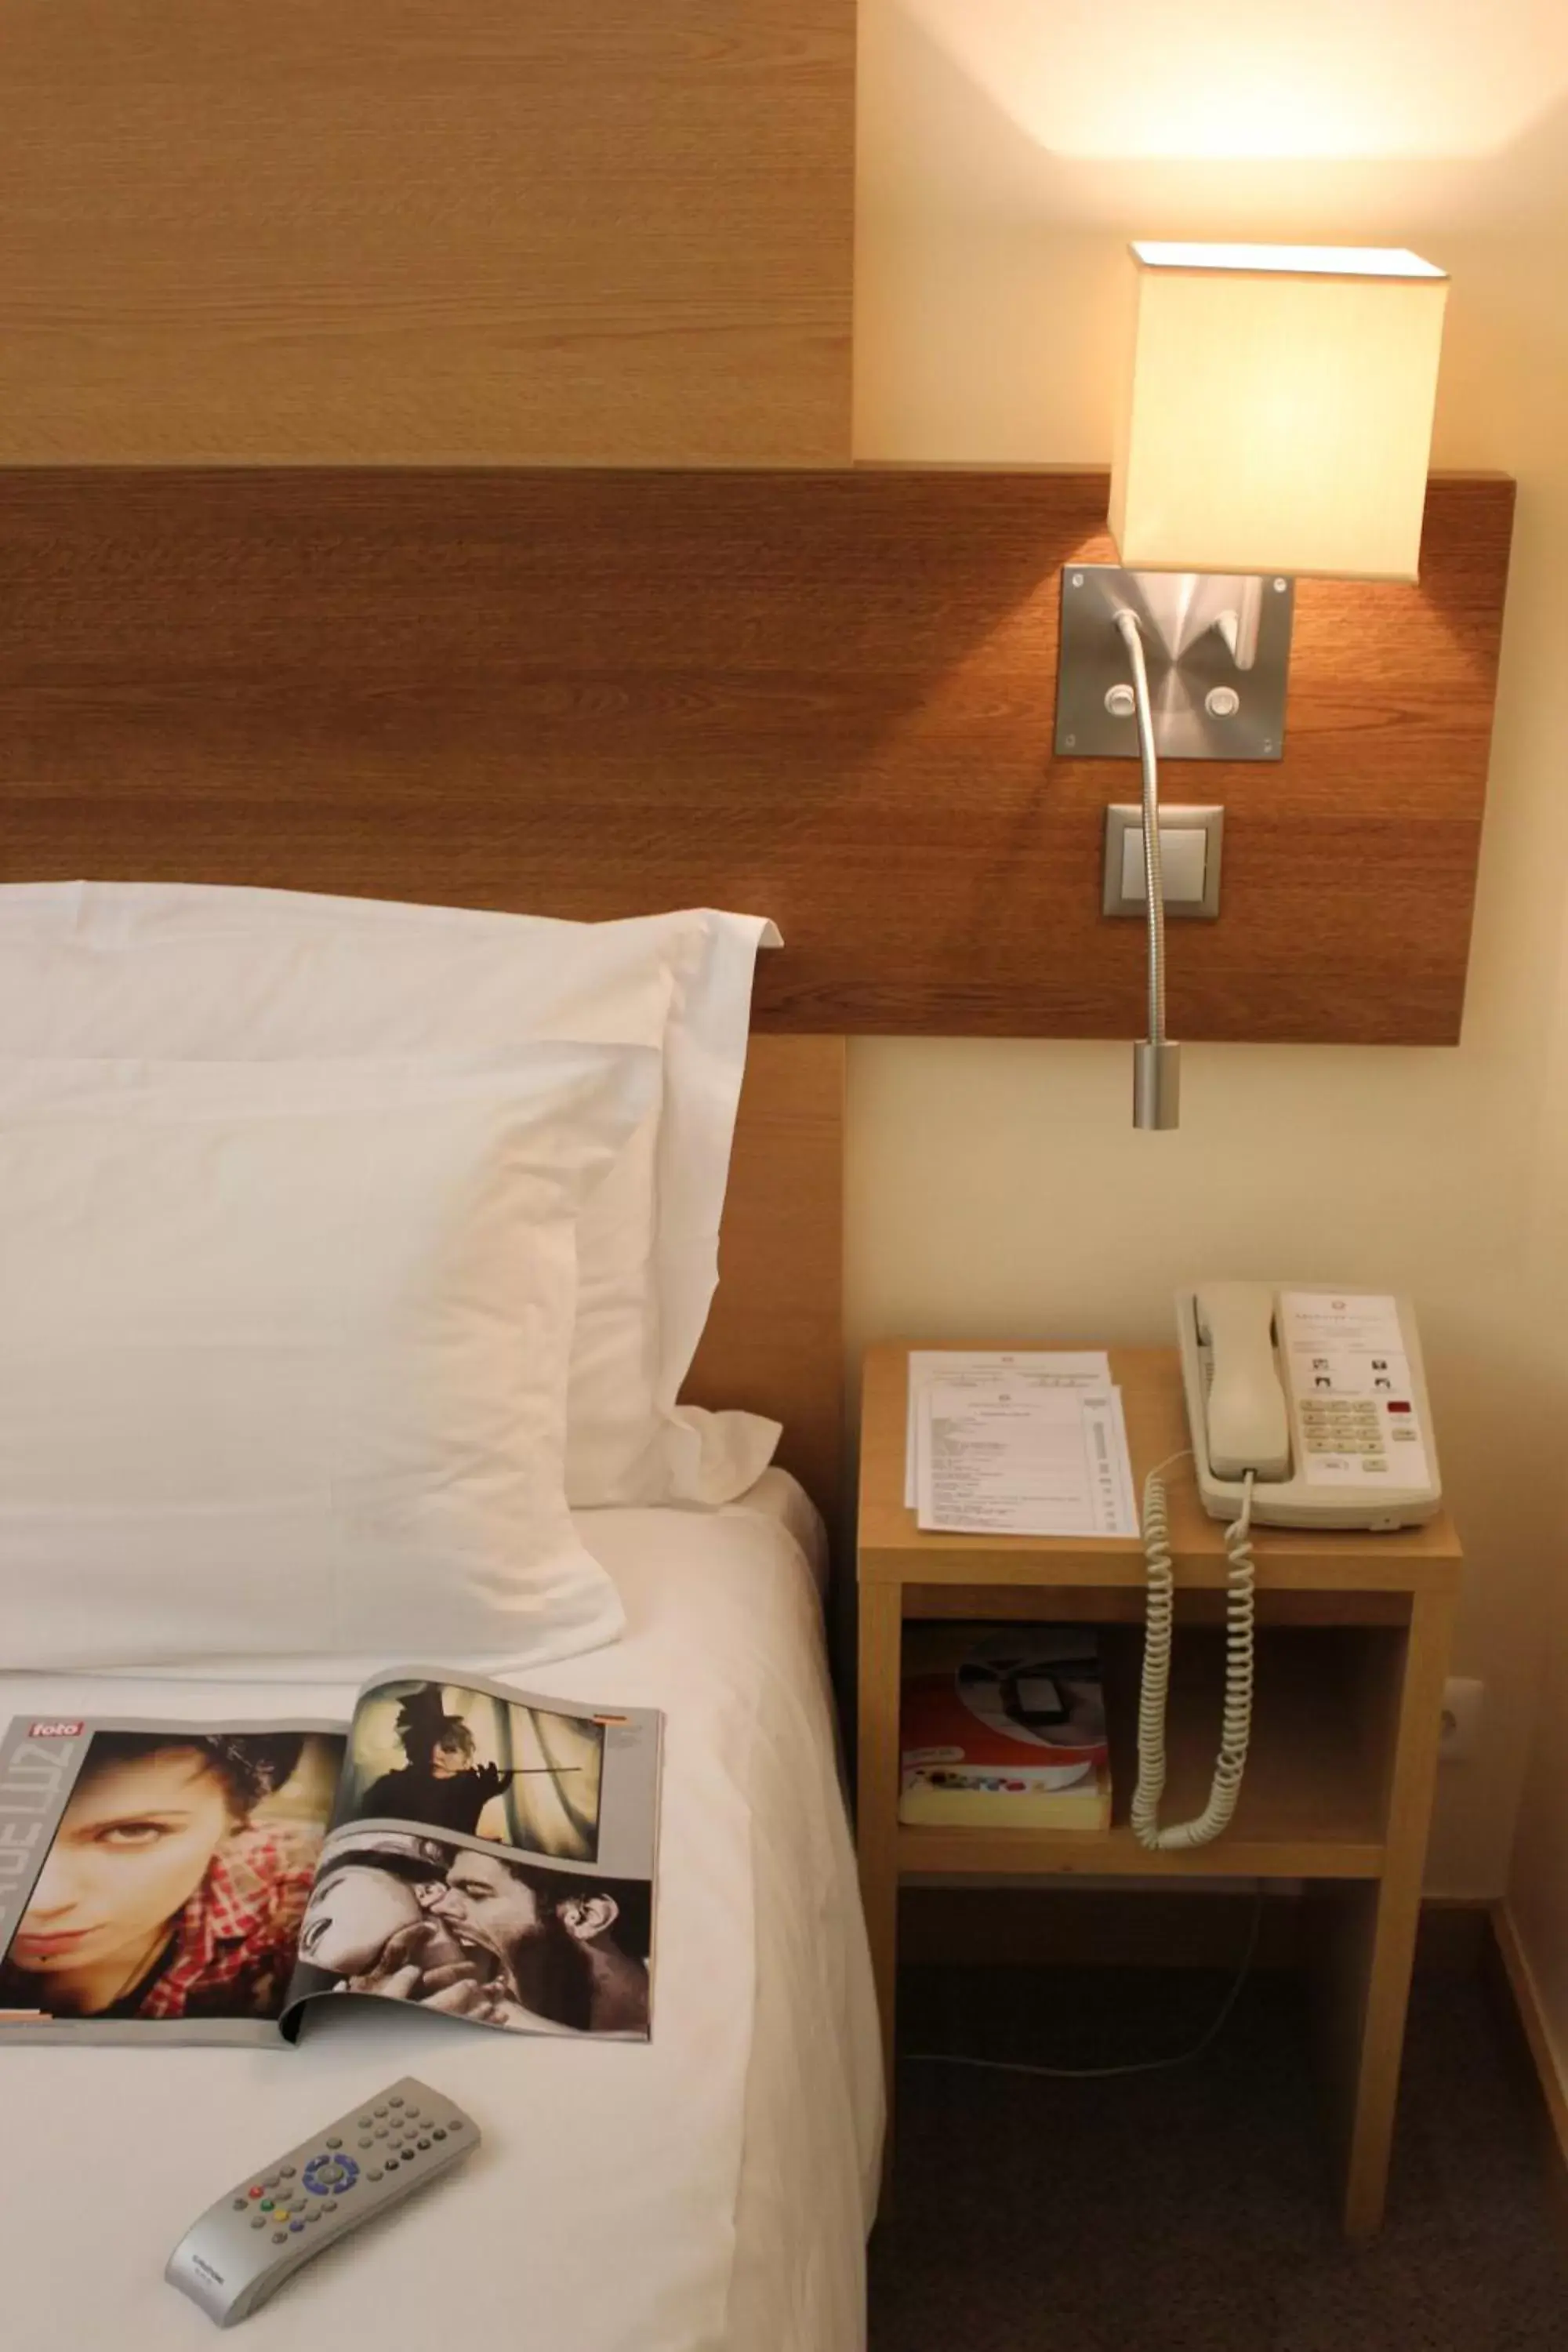 Bed in Hotel Principe Lisboa